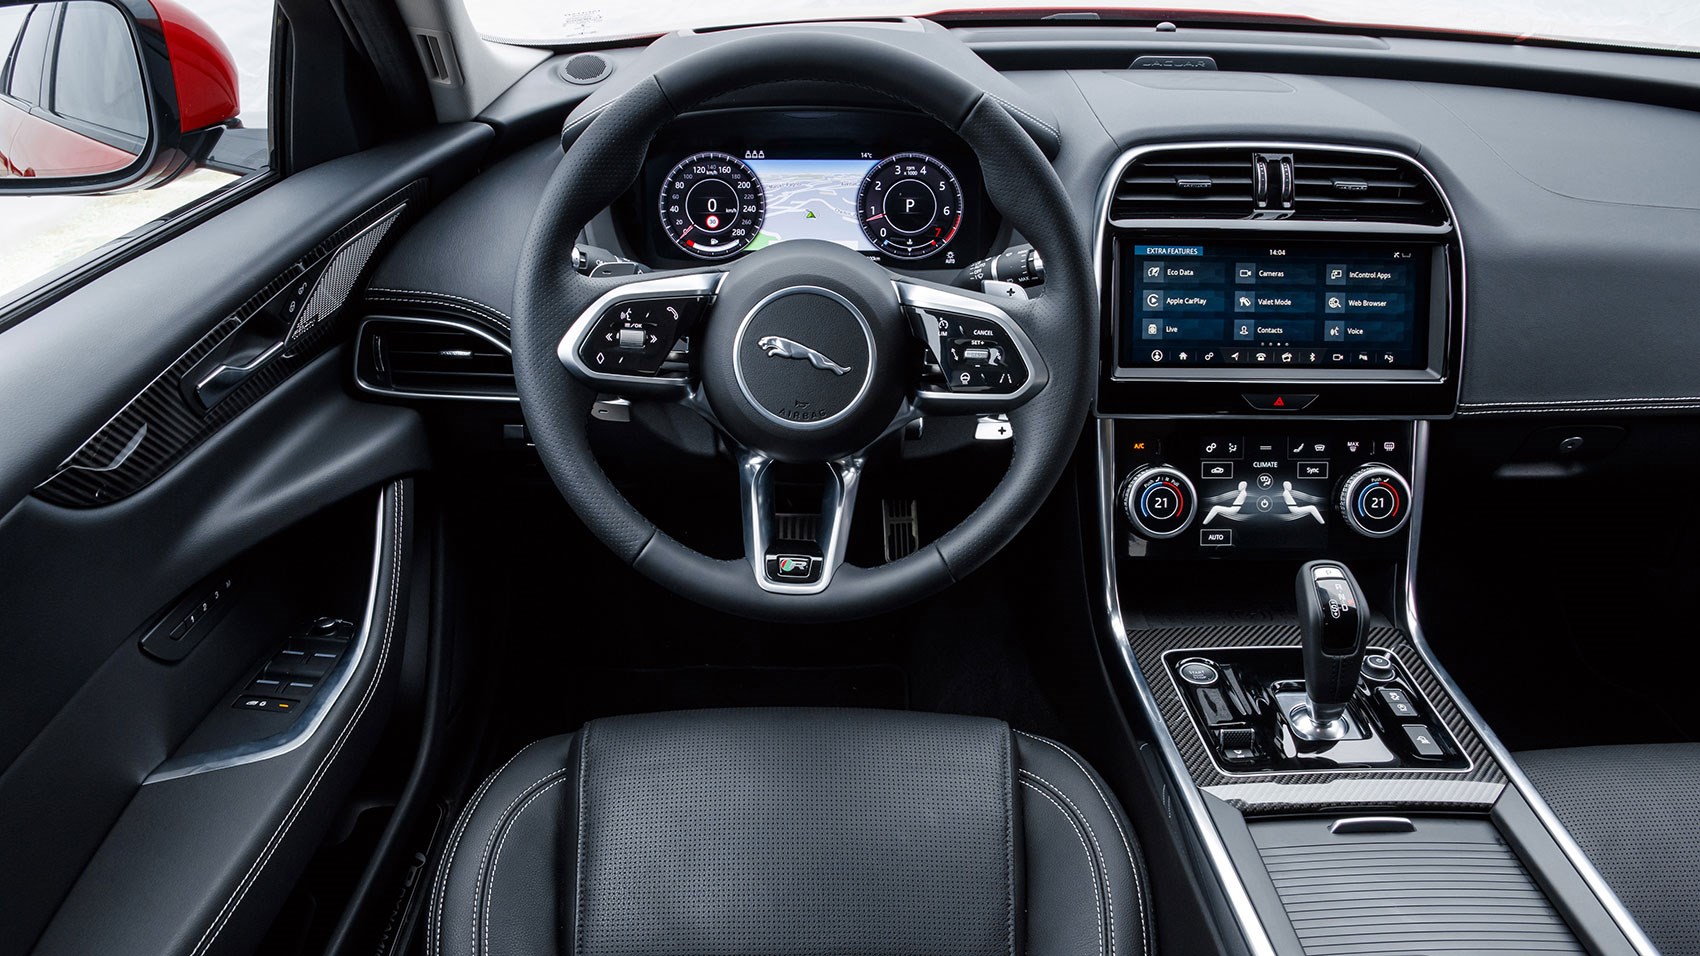 Jaguar XE saloon interior 2020 model year